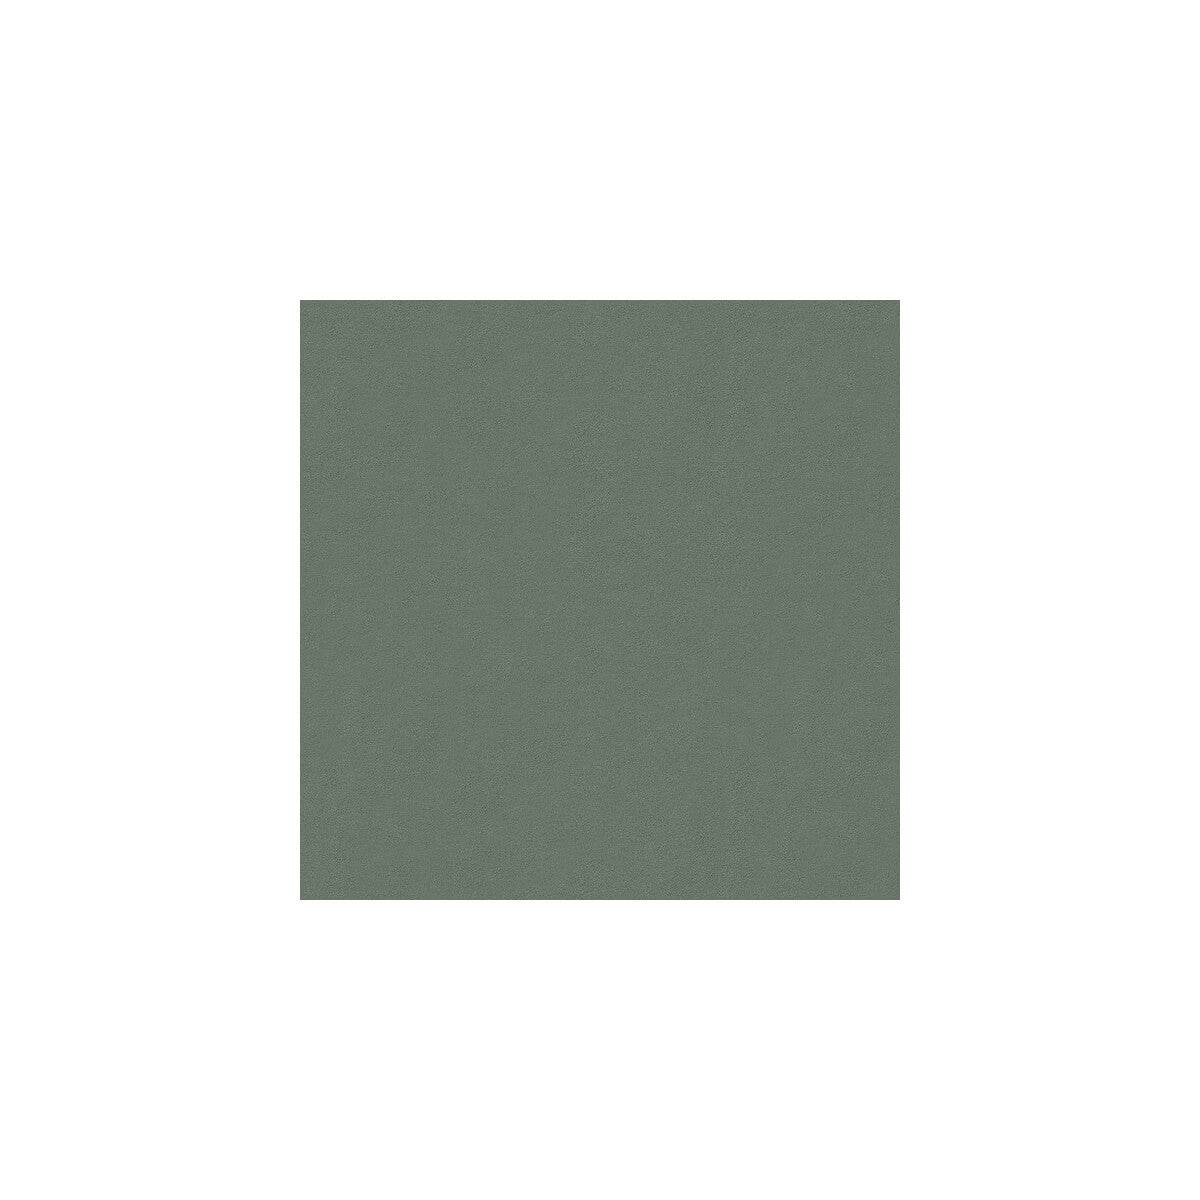 Ultrasuede fabric in jade color - pattern ULTRASUEDE.323.0 - by Kravet Design in the Ultrasuede collection